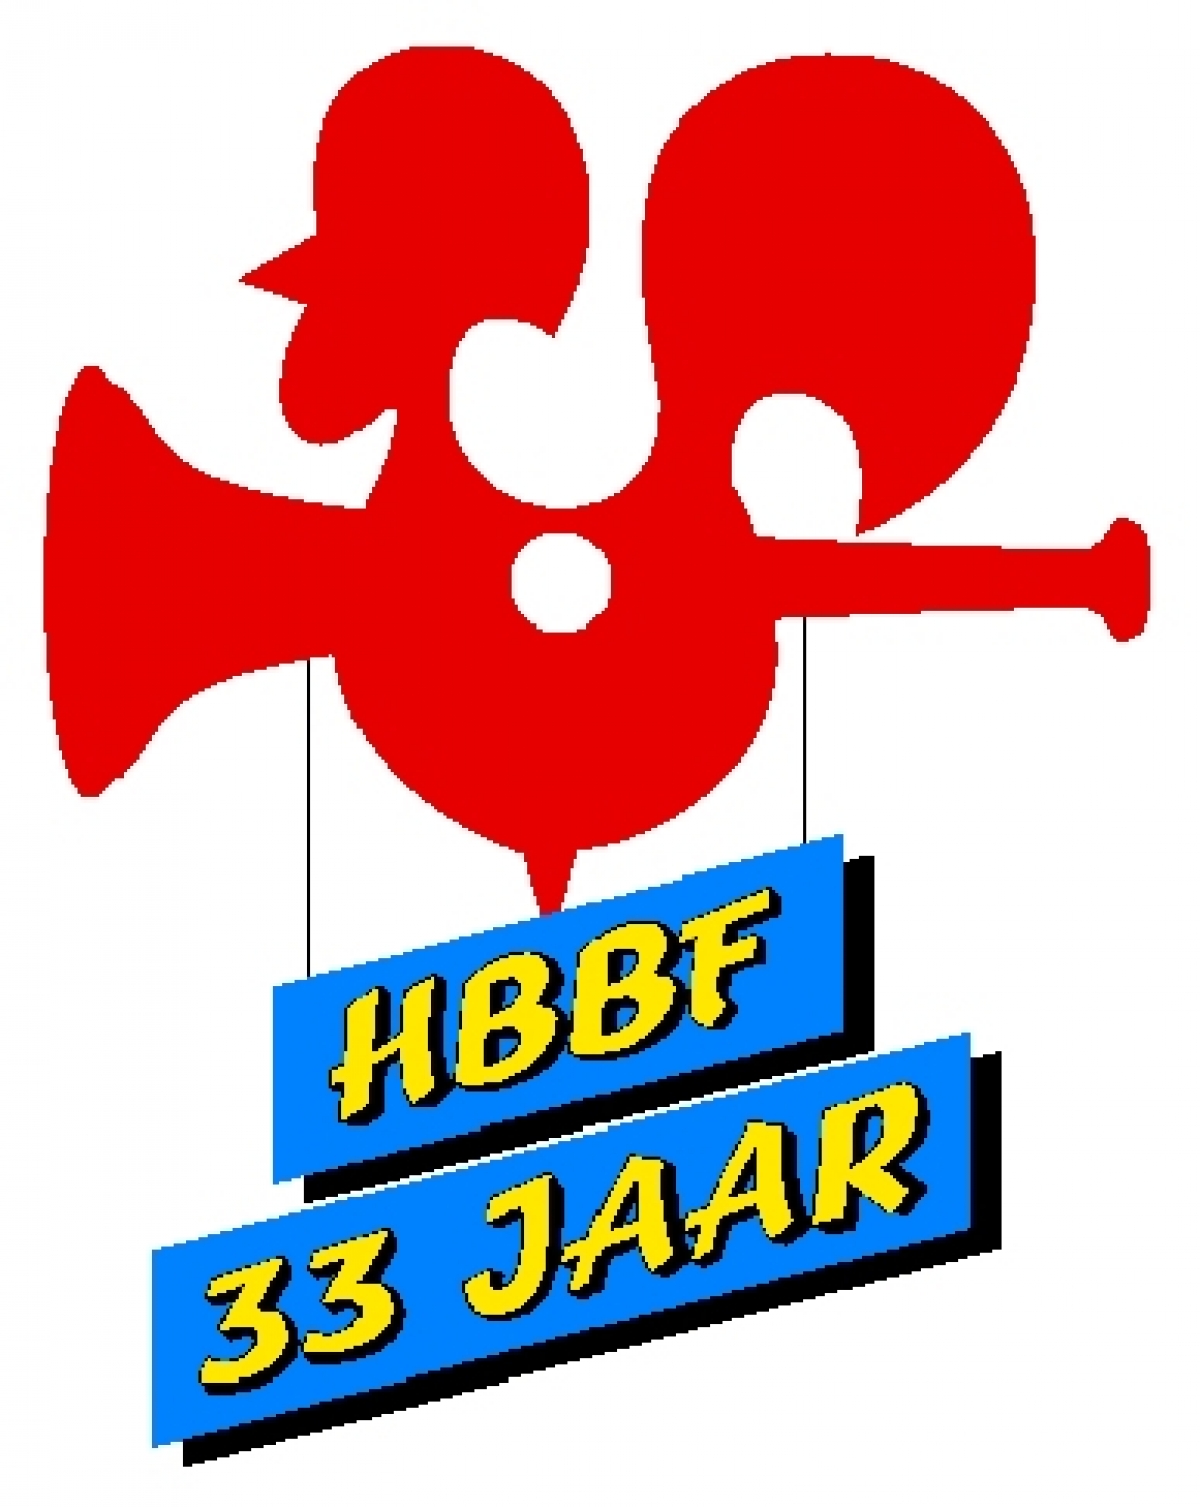 2005-01-23 33 Jaar Haone Boere Blaos Festijn